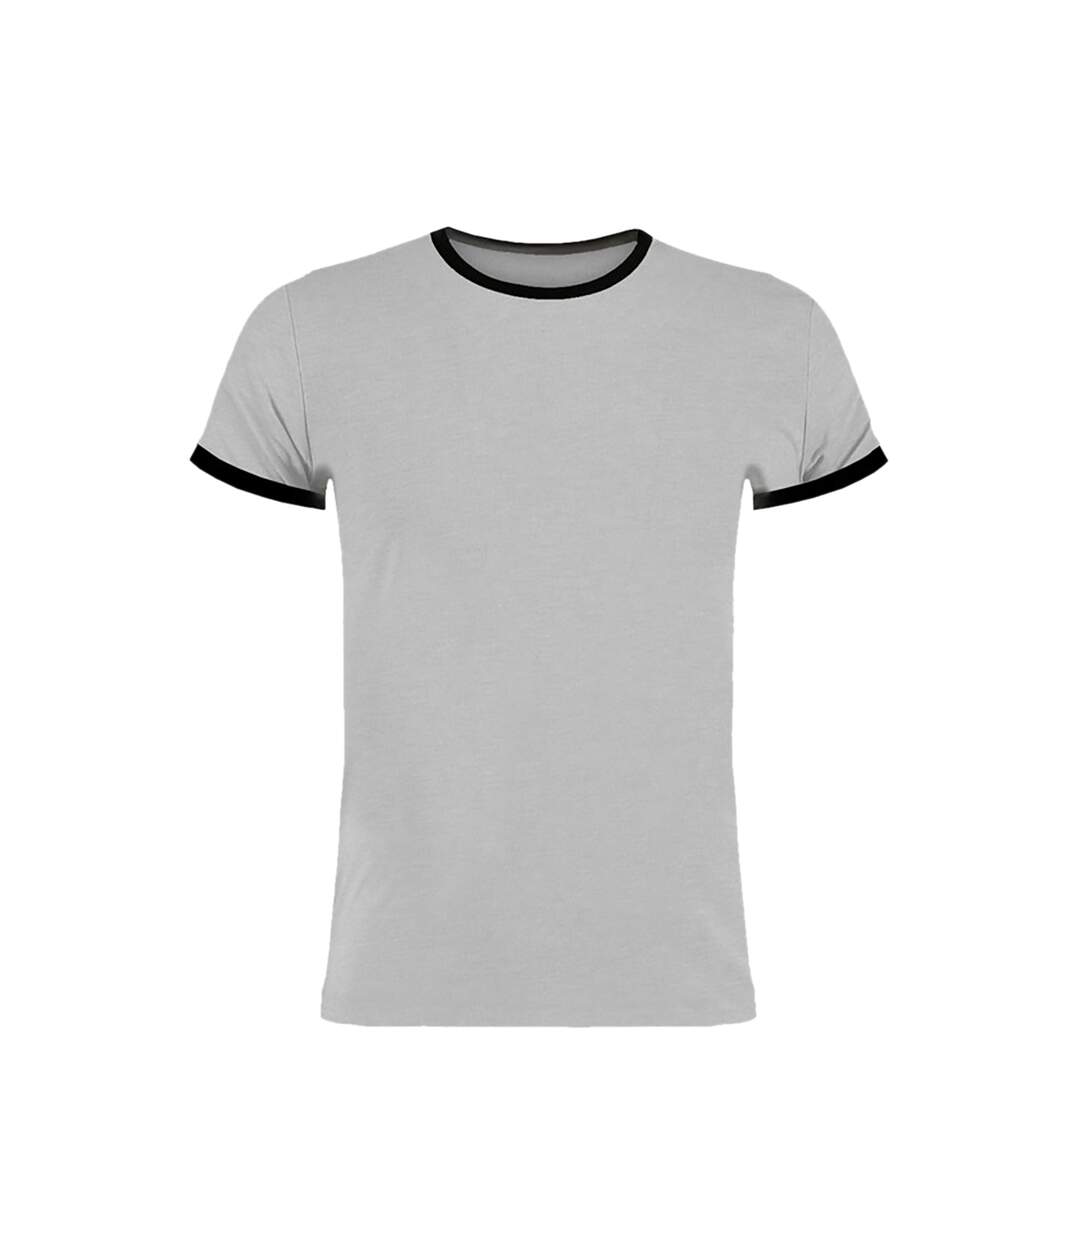 Kustom Kit Mens Fashion Fit Ringer T-Shirt (Light Gray Marl/Black)